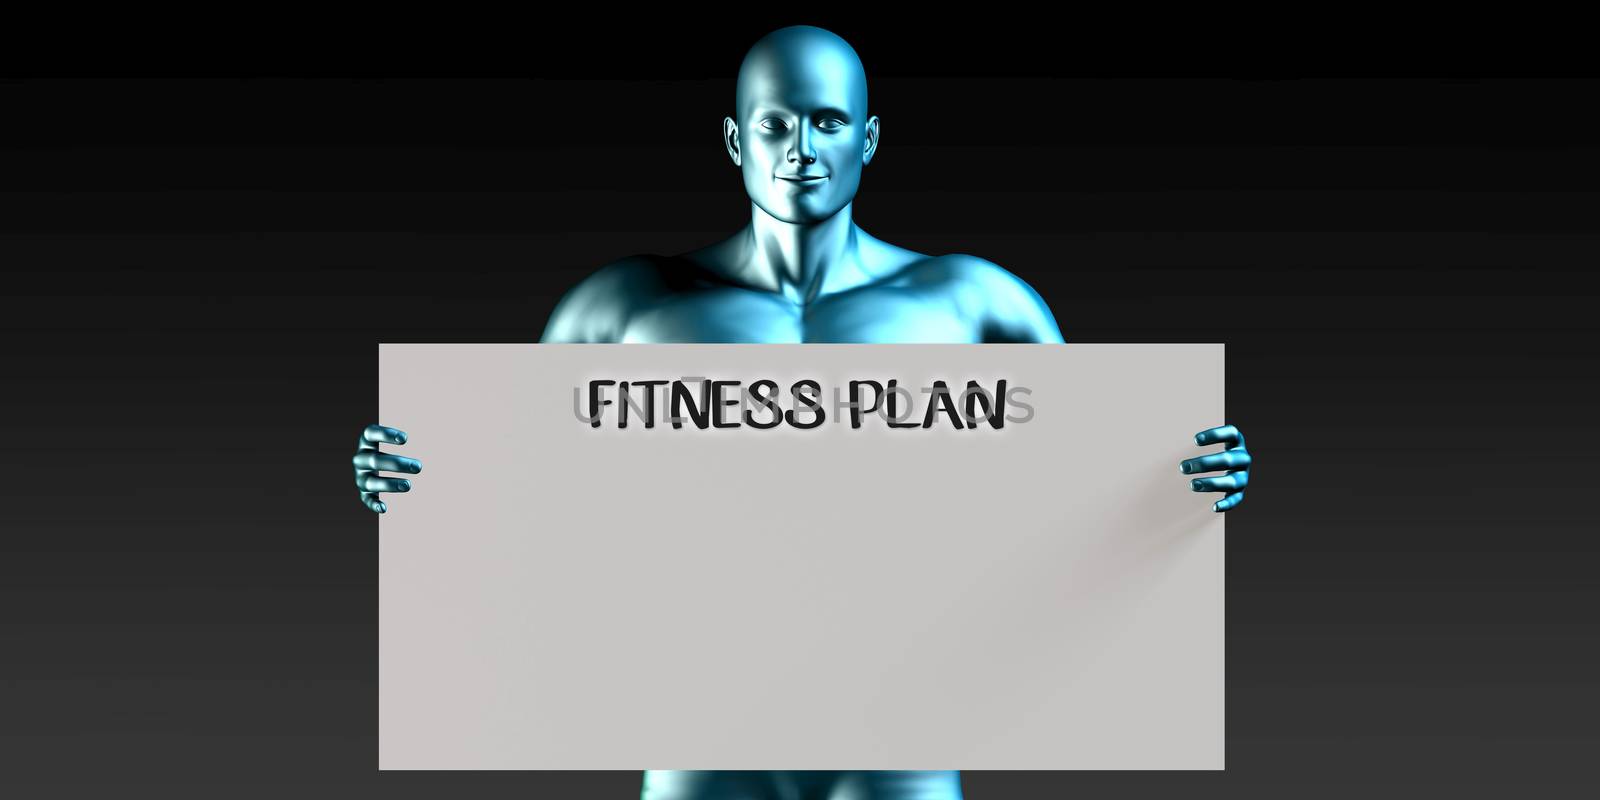 Fitness Plan by kentoh